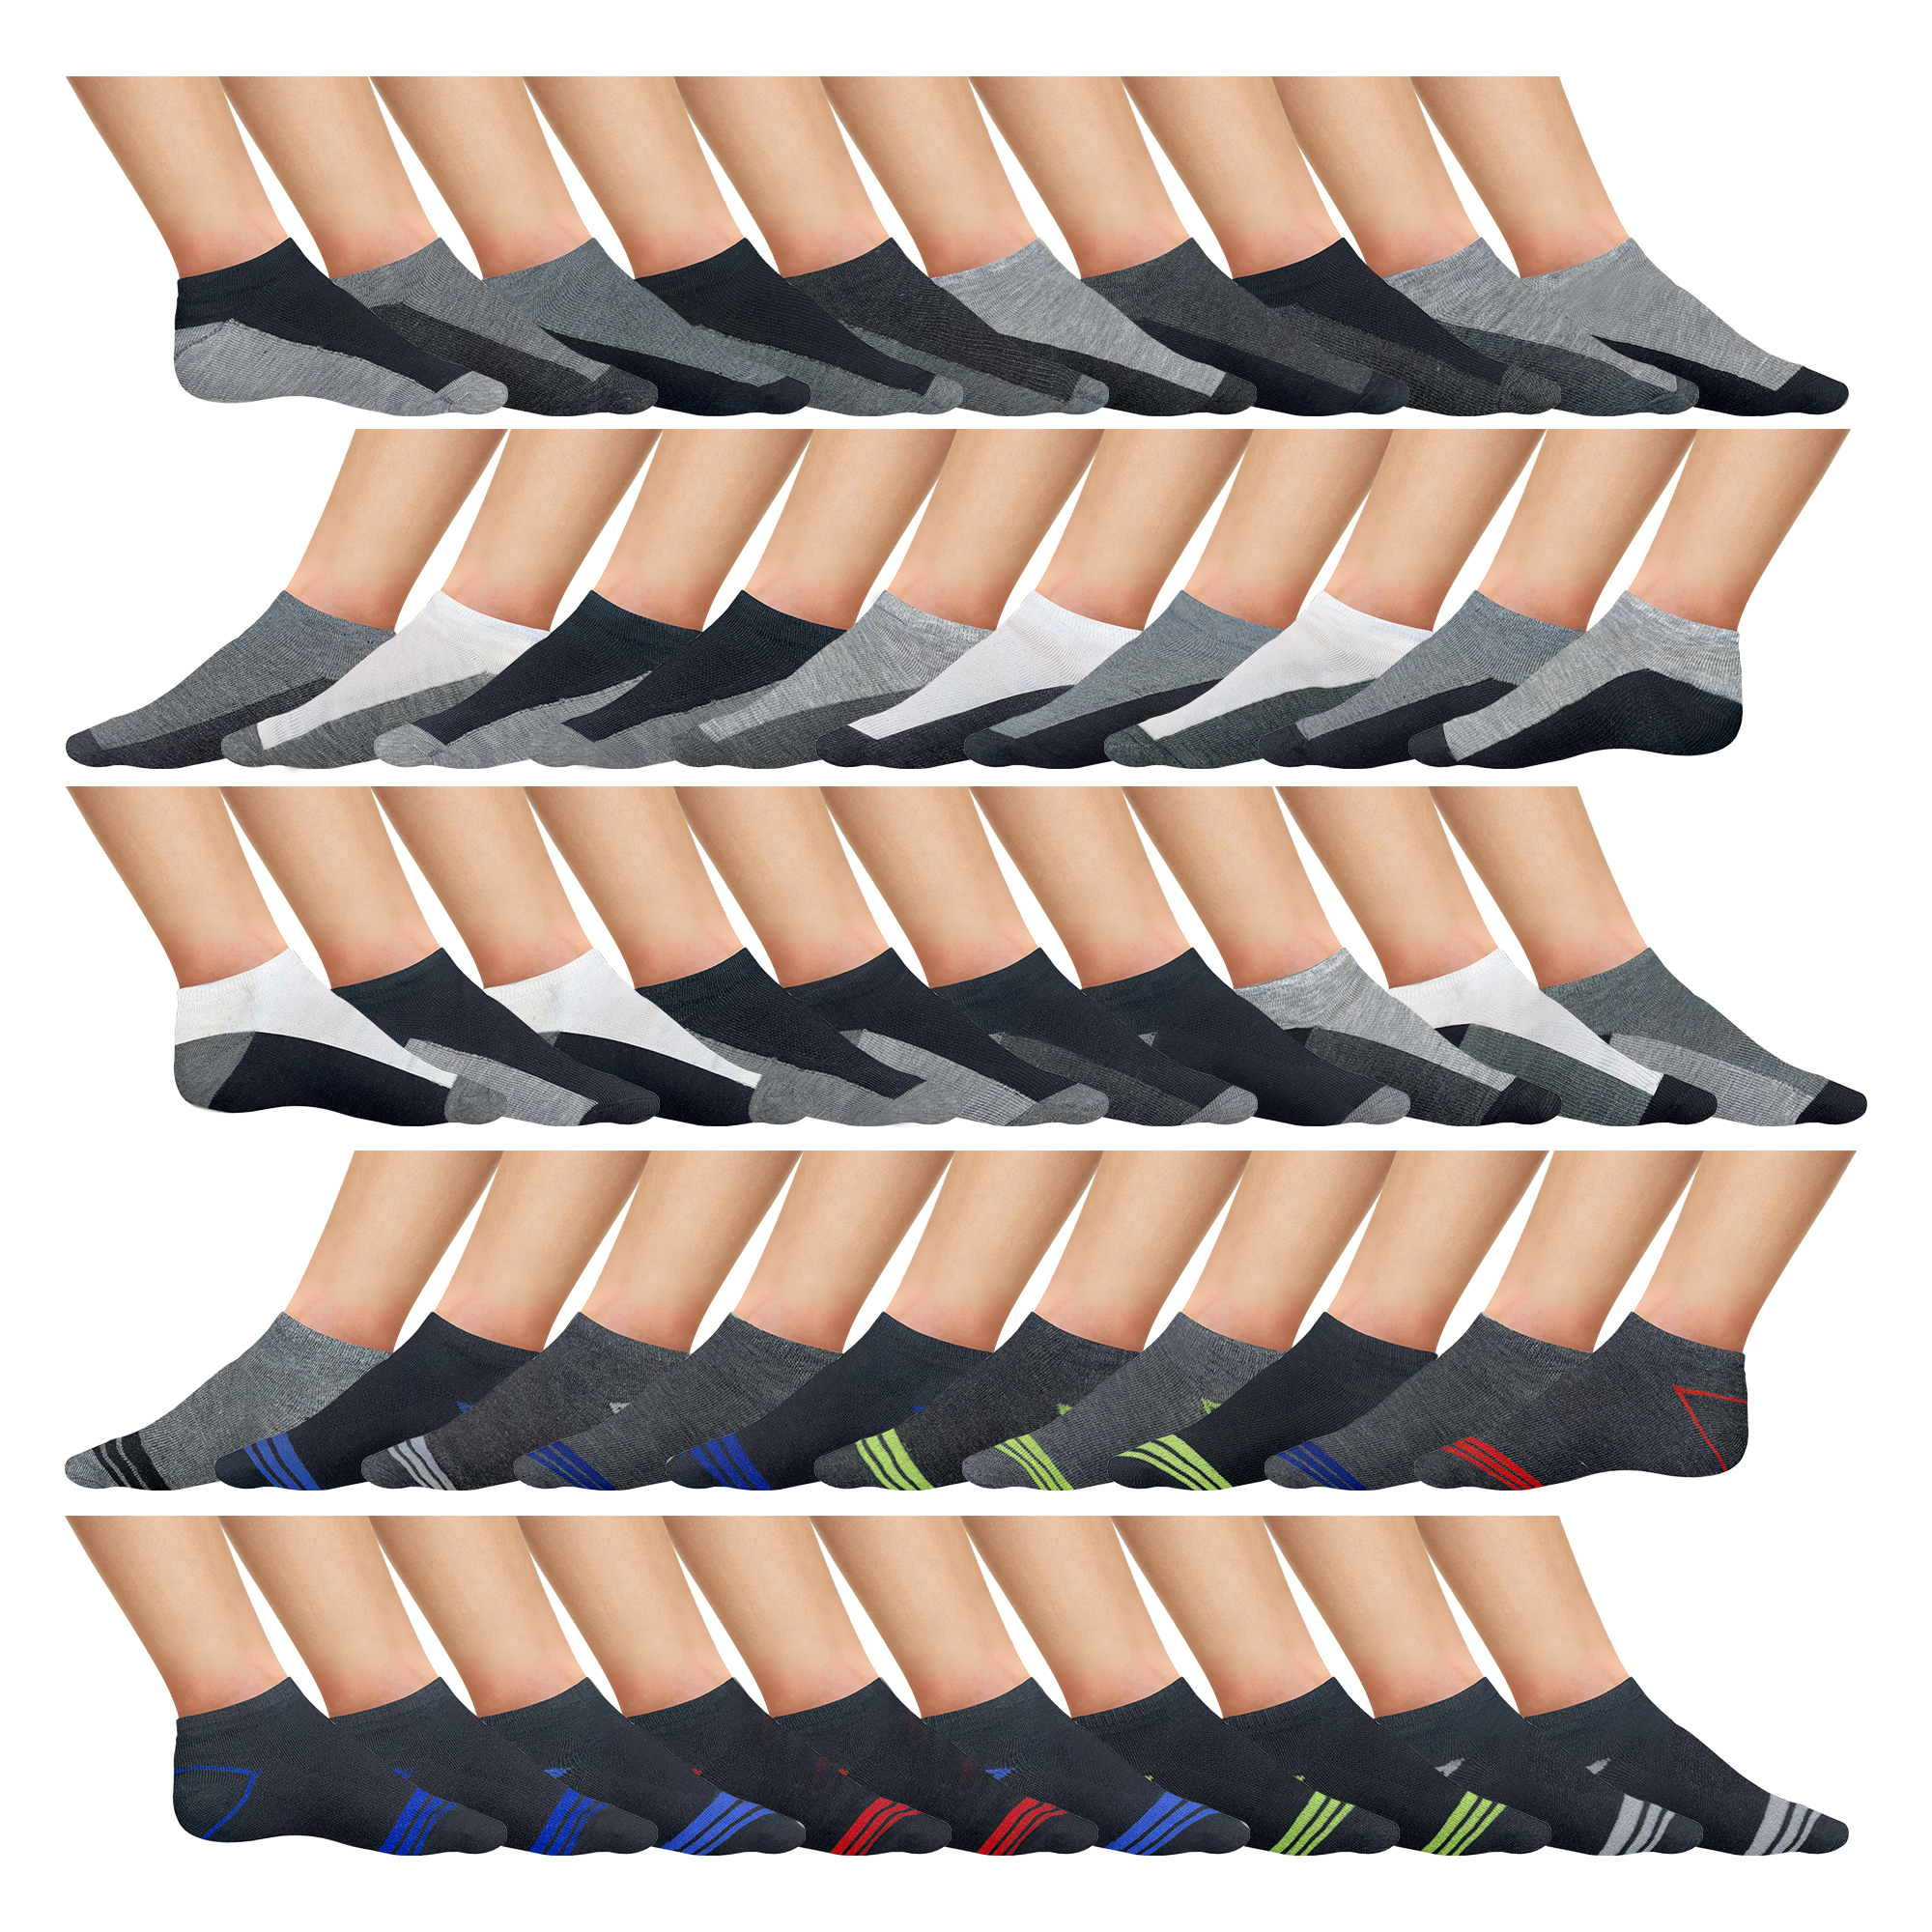 20 Pairs Men's Active Low-Cut Ankle Socks